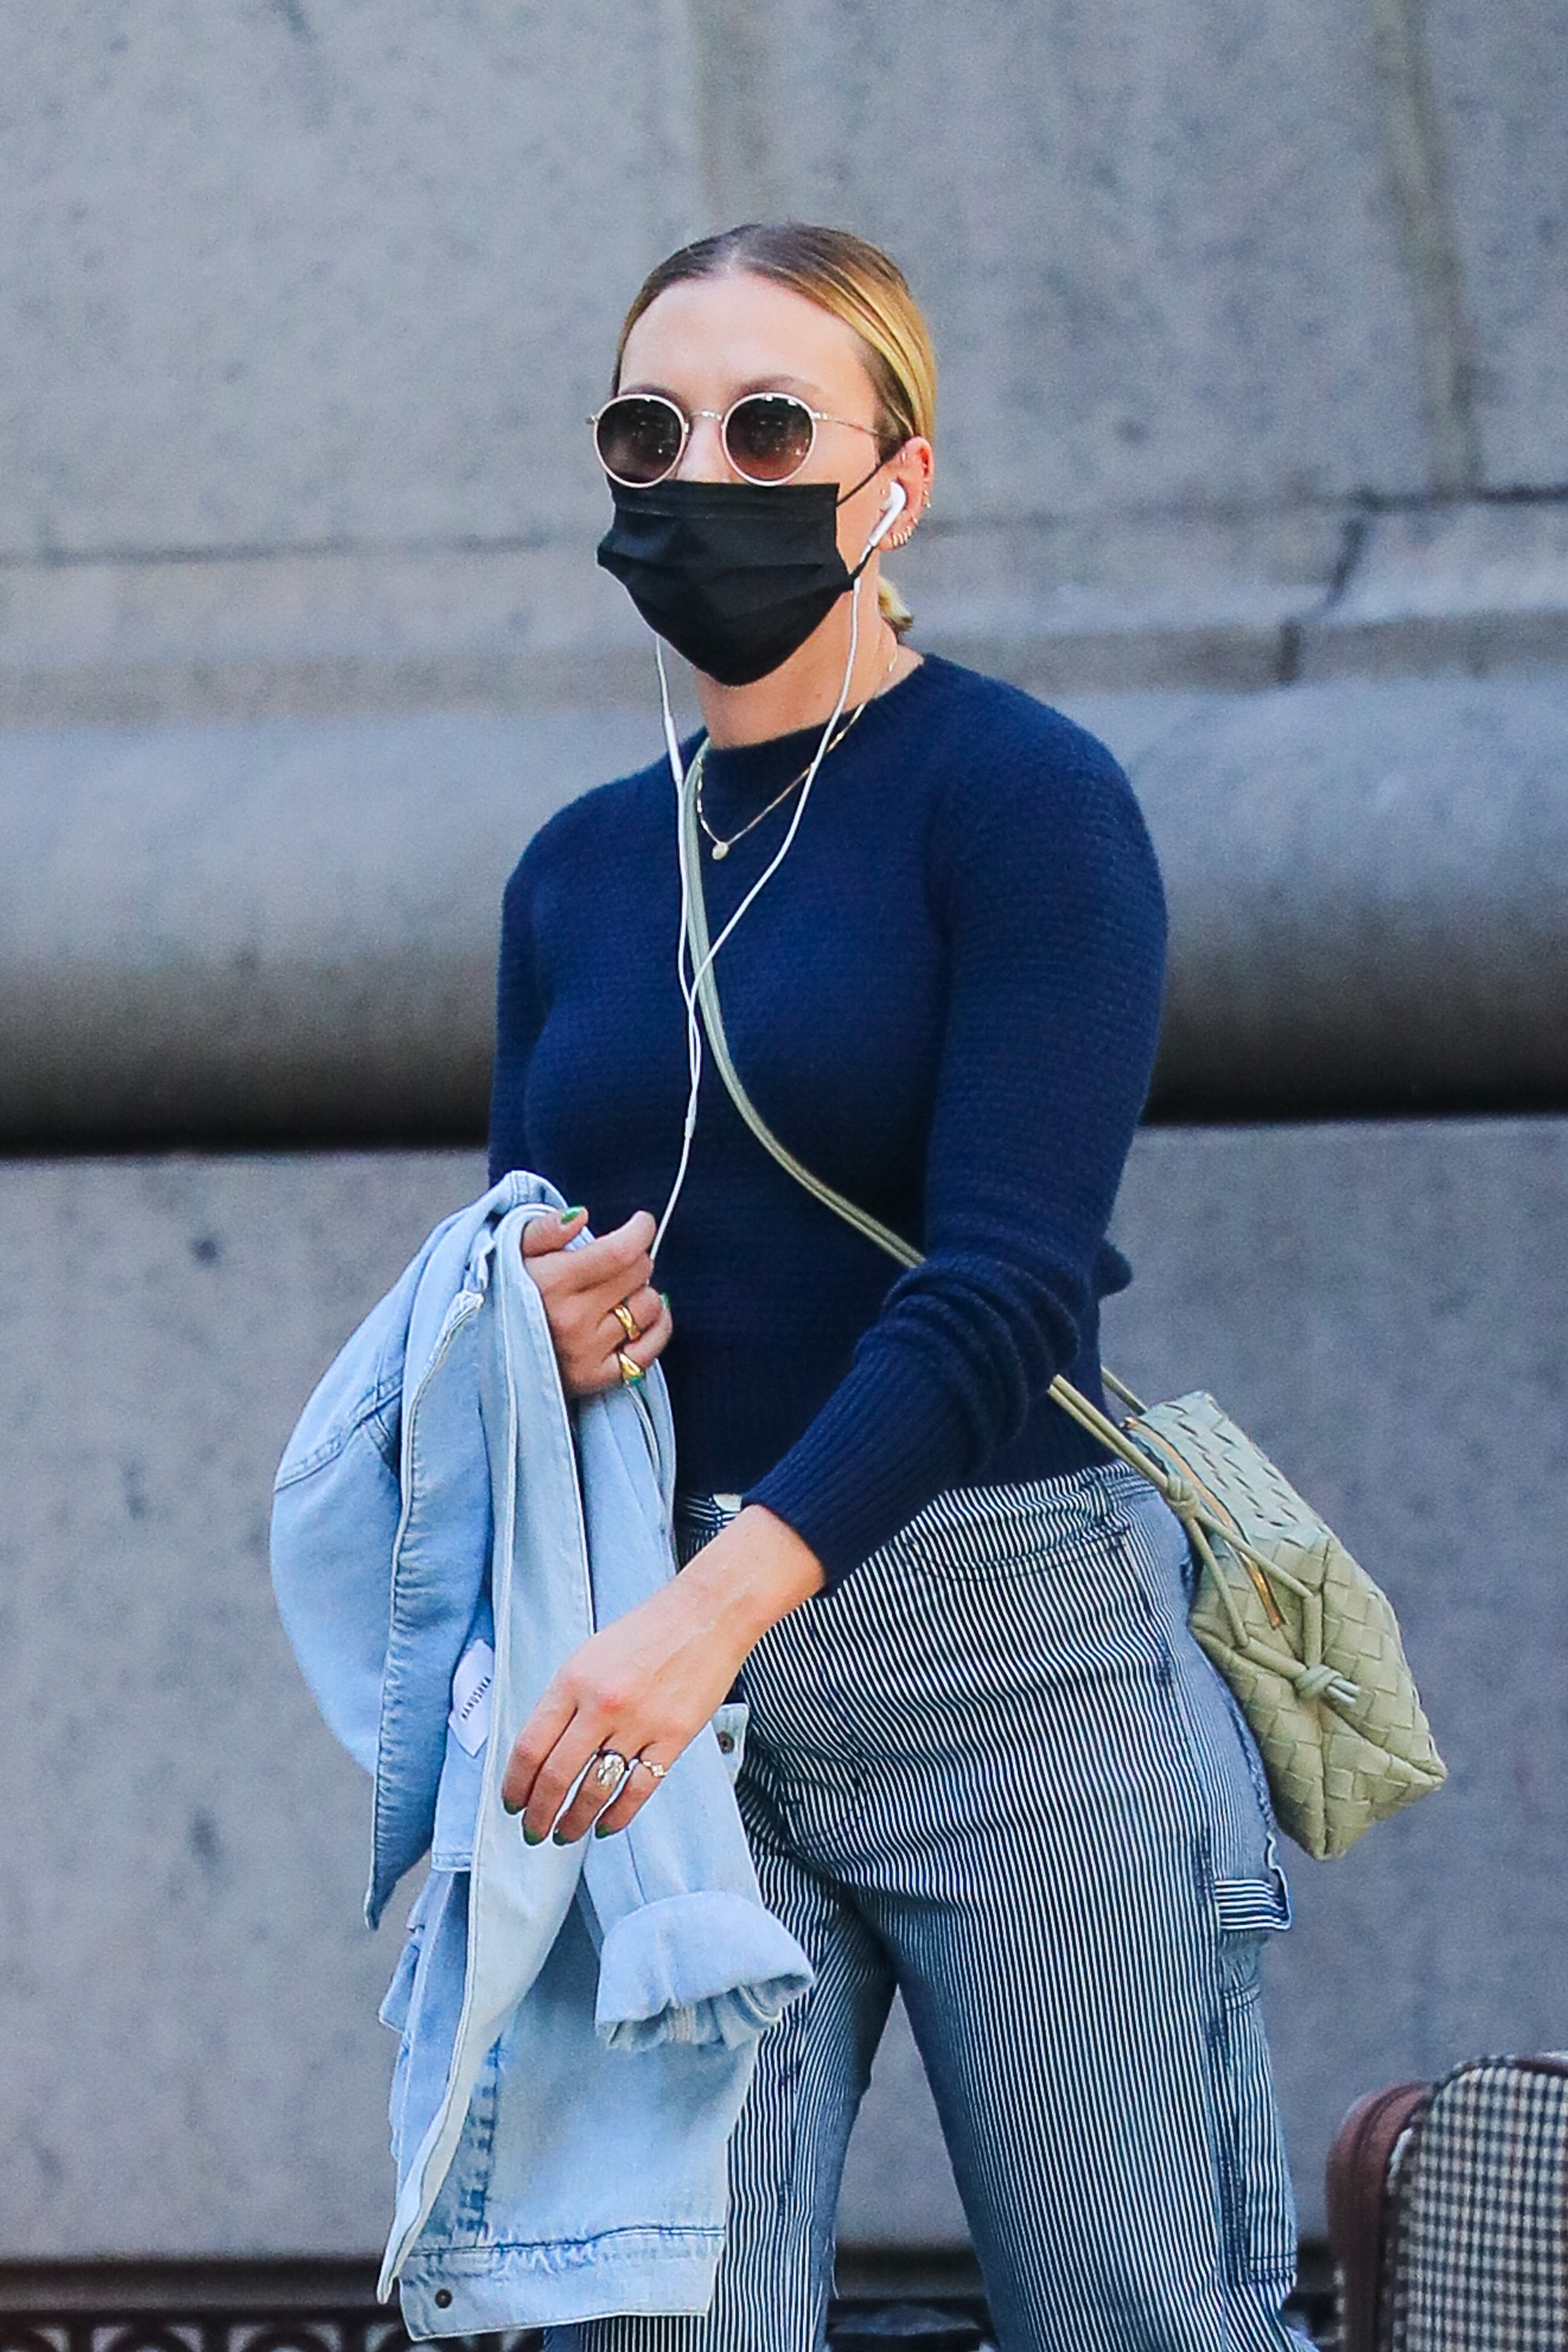 Remera azul, lentes oscuros y pantalón azul tipo carpintero, Scarlett Johansson decidió pasar desapercibida mientras daba un paseo por las calles de Nueva York